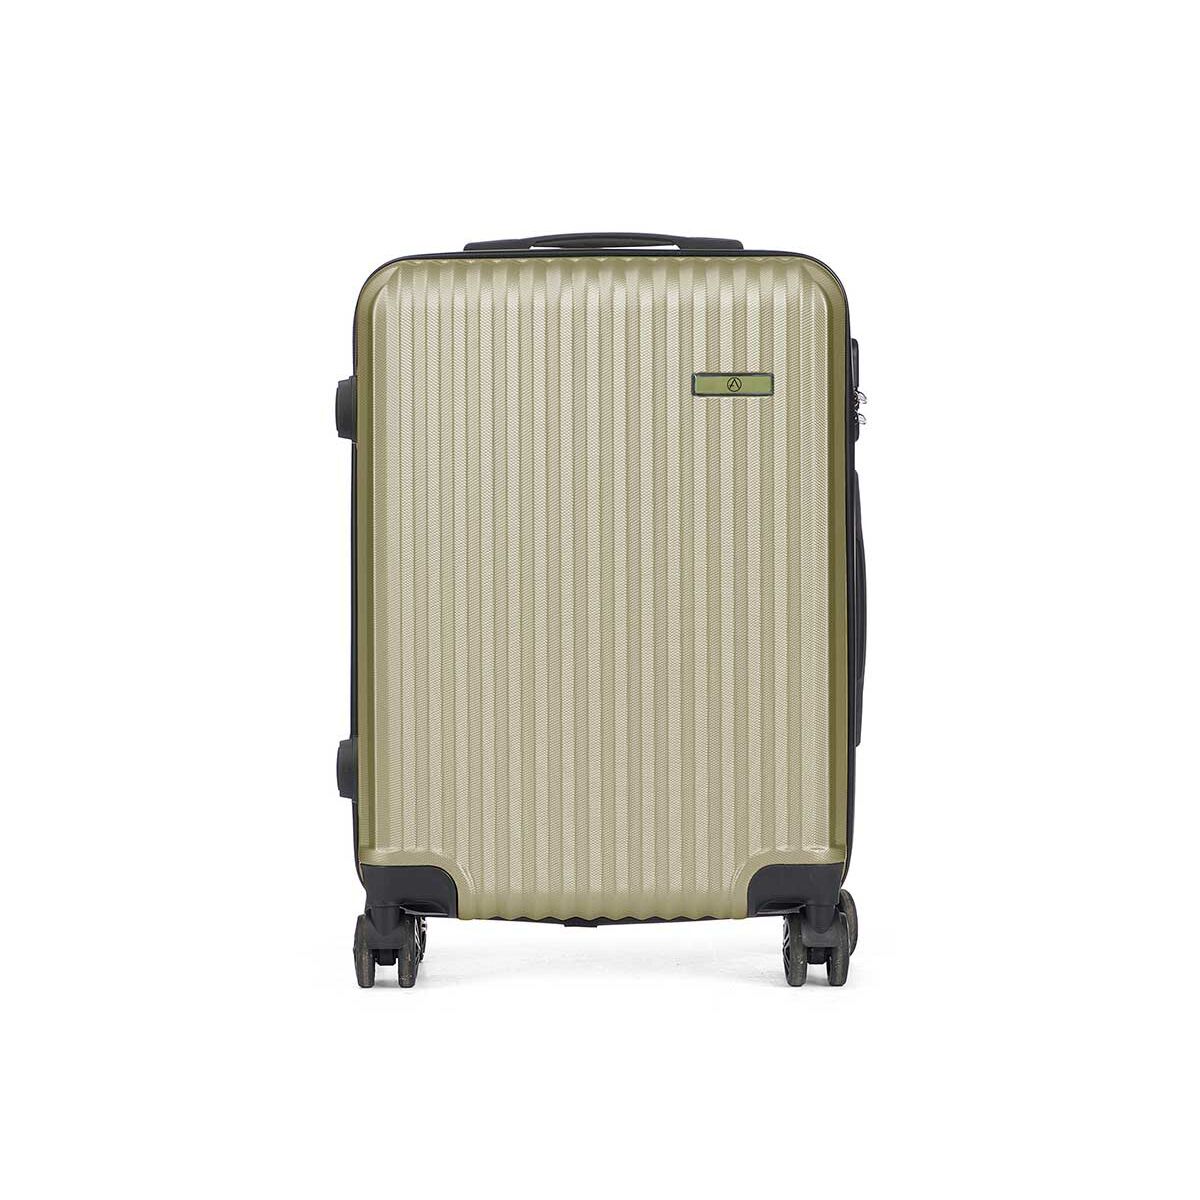 Cabin suitcase Green 38 x 57 x 23 cm Stripes